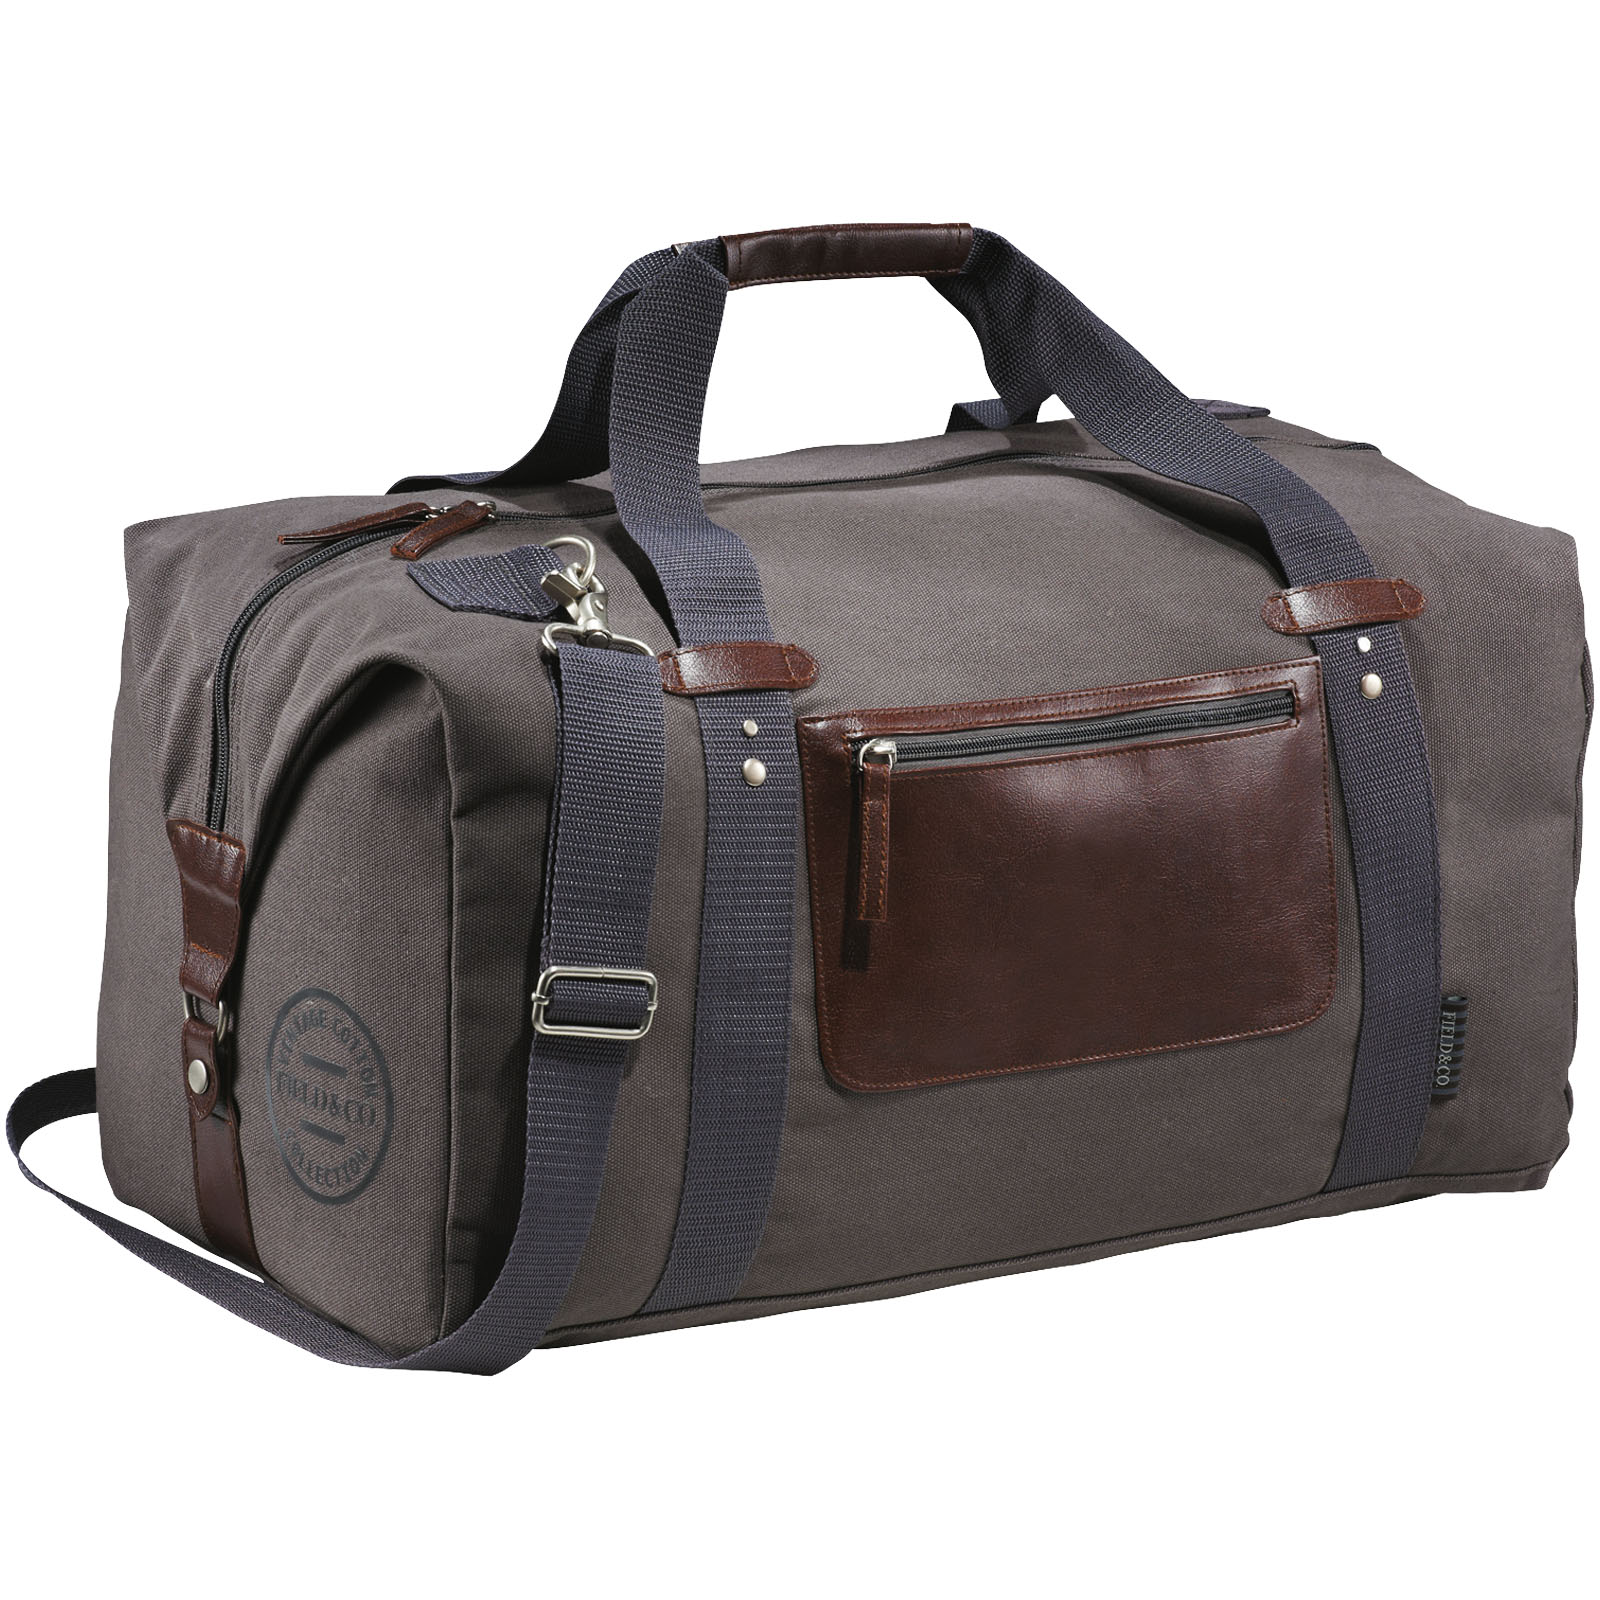 Travel bags - Classic duffel bag 37L